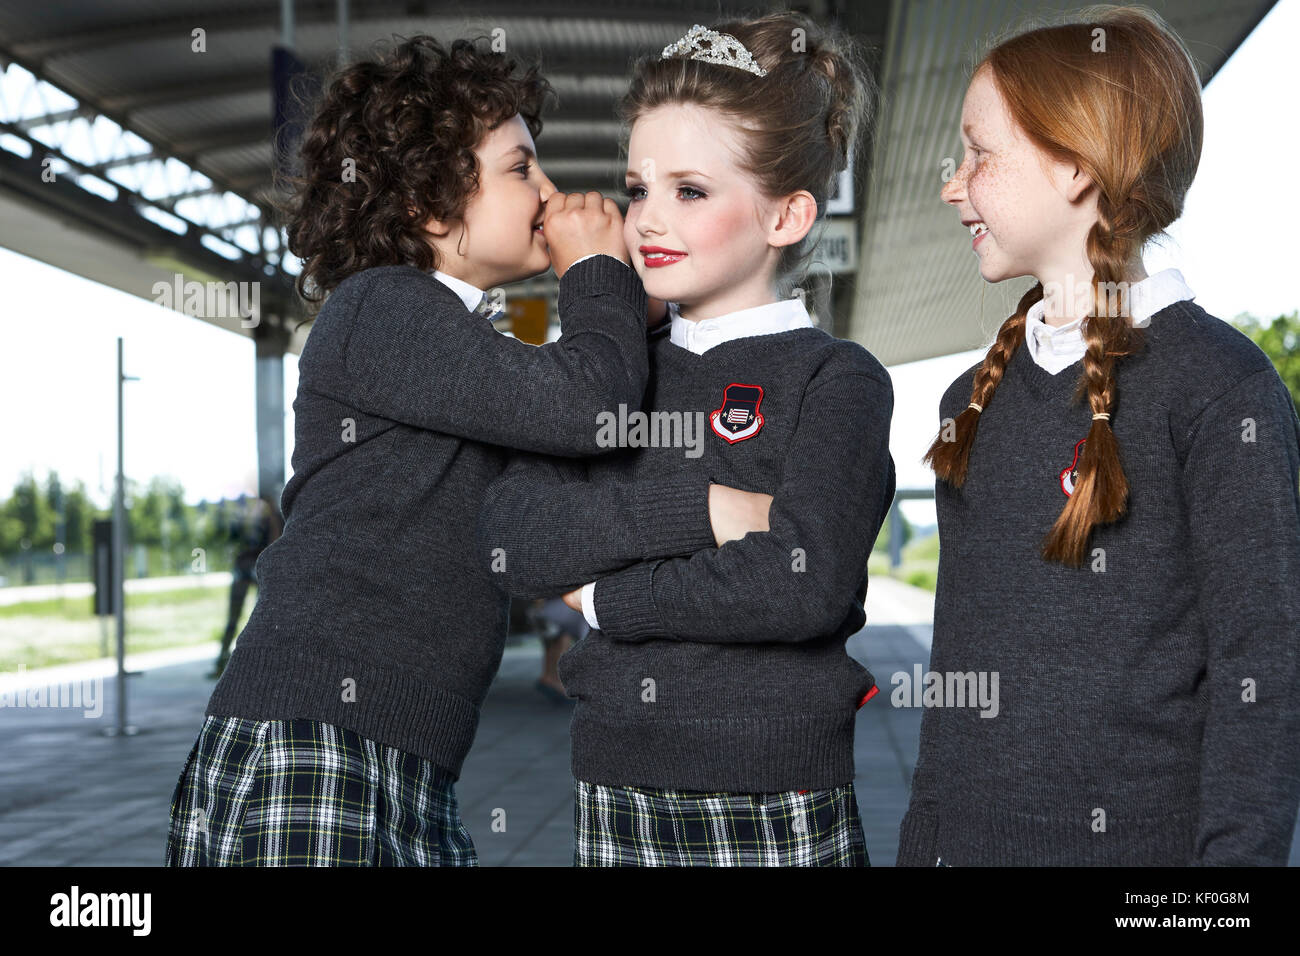 Three girls at platform wearing school uniform Stock Photo